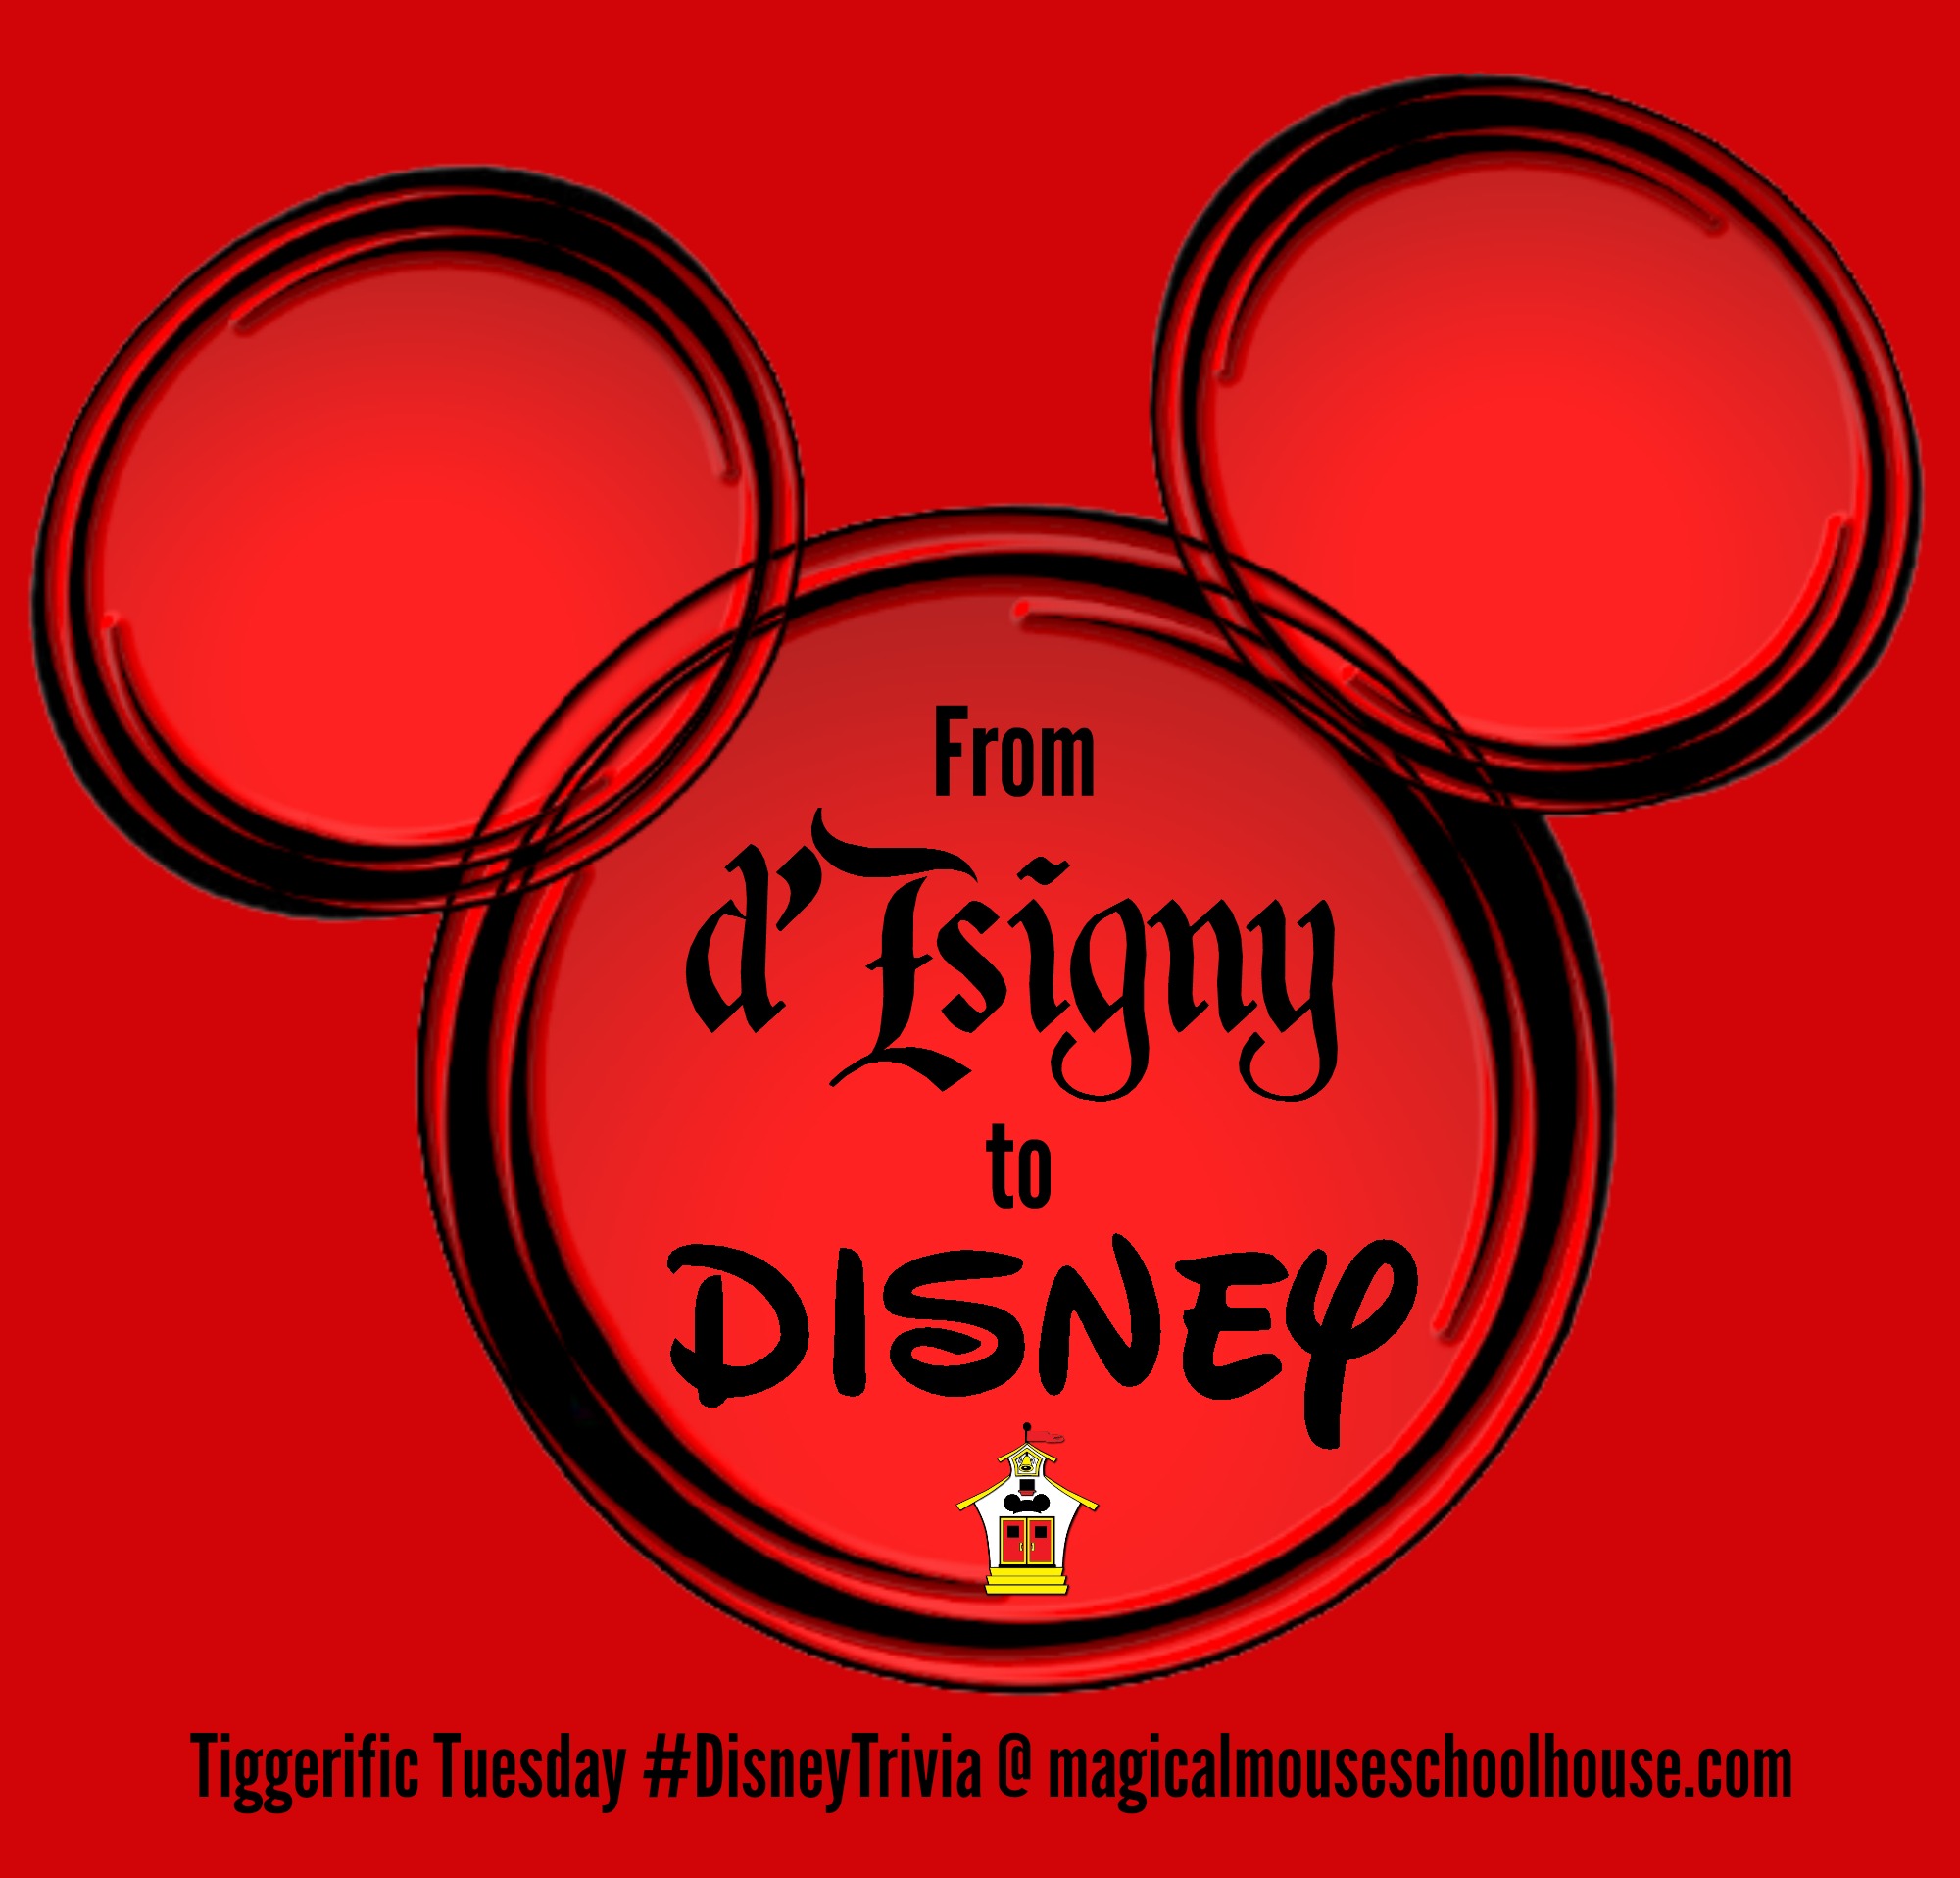 Disney-disigny-trivia